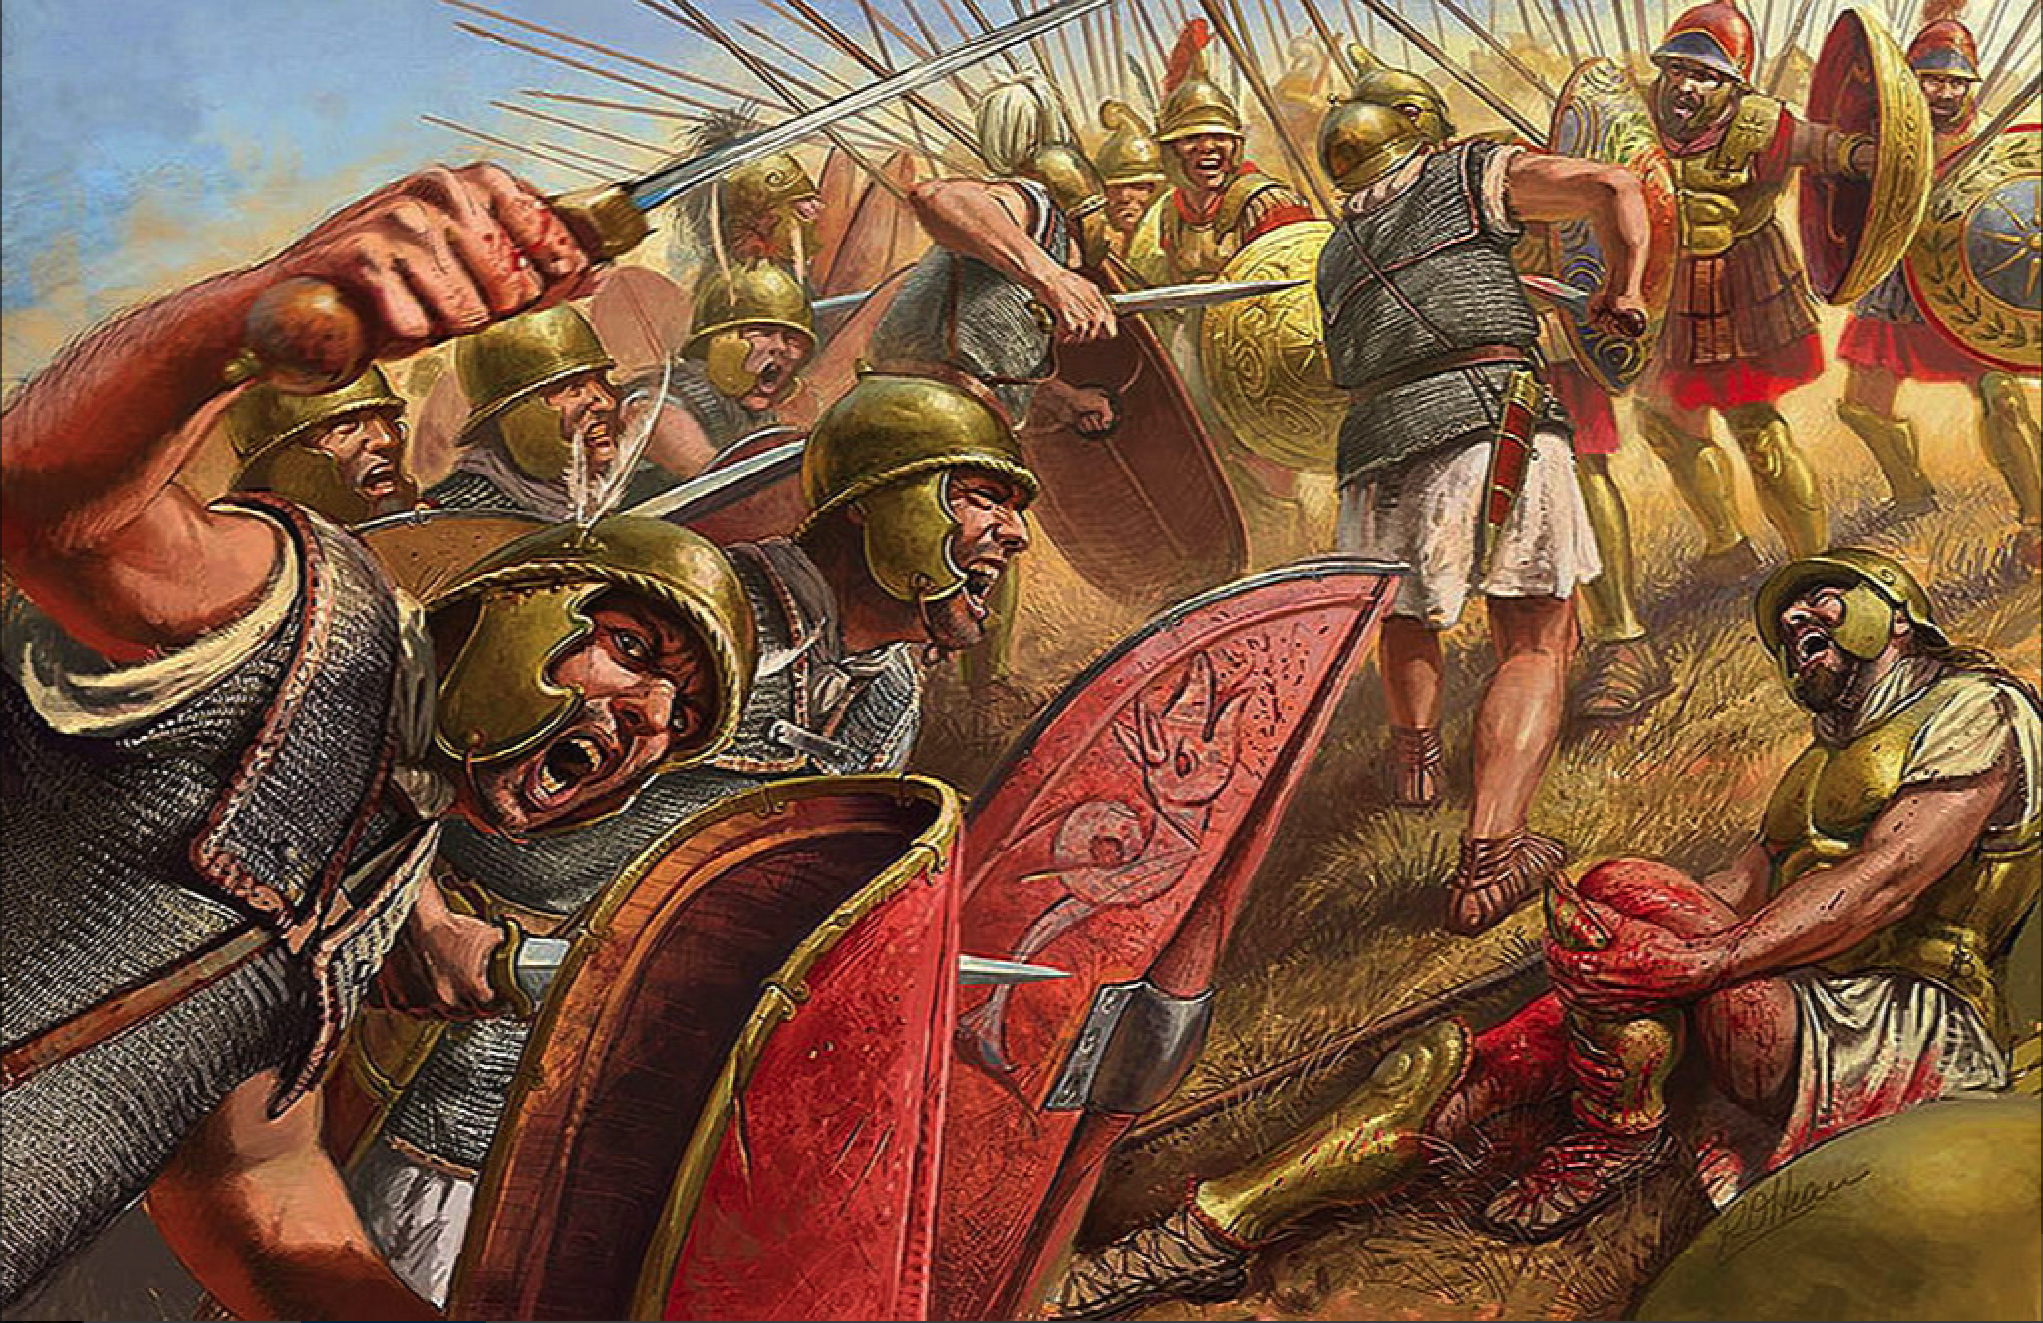 Государство филистимлян. Битва при Киноскефалах 197 г до н.э. Римский Легион фаланга. Битва македонцев против римлян. Македонская фаланга.